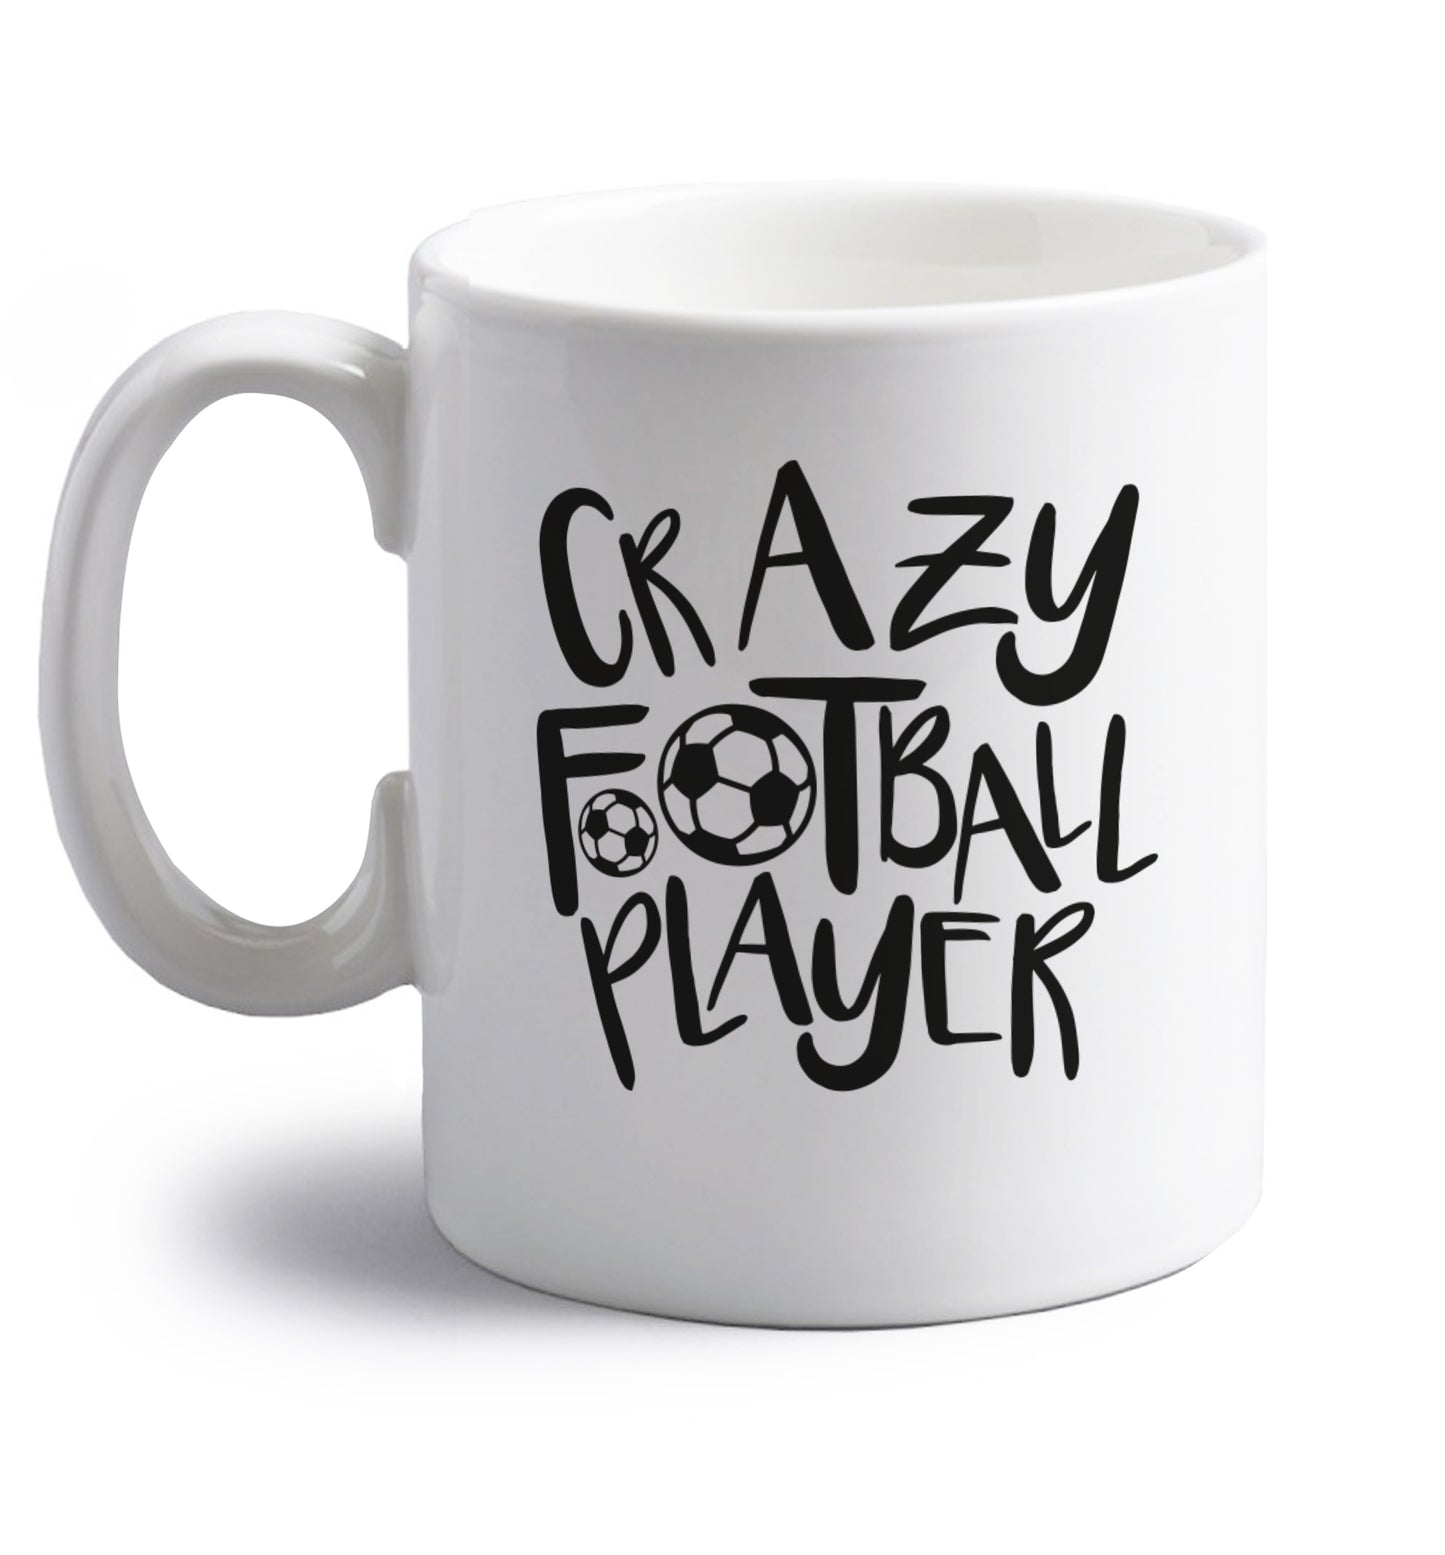 Crazy football player right handed white ceramic mug 